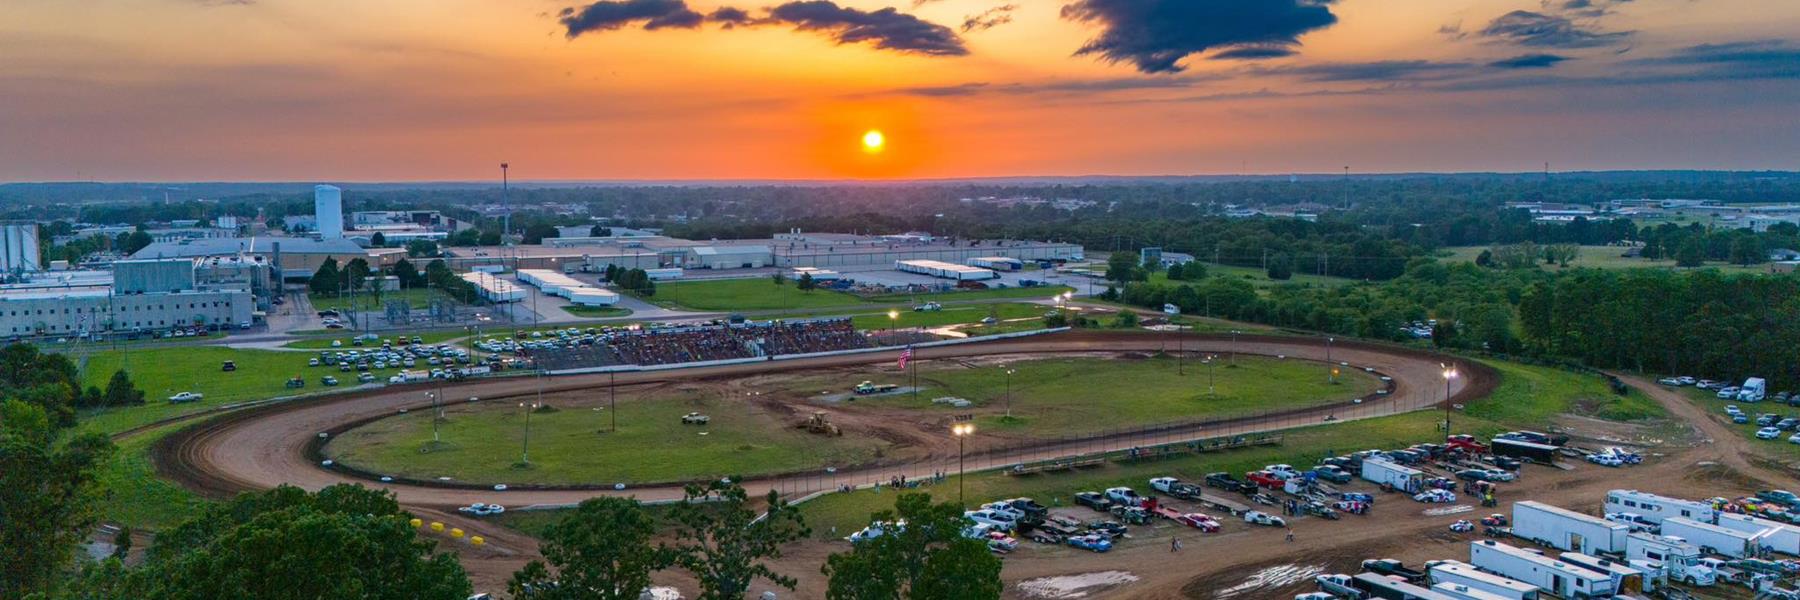 5/12/2024 - Monett Motor Speedway